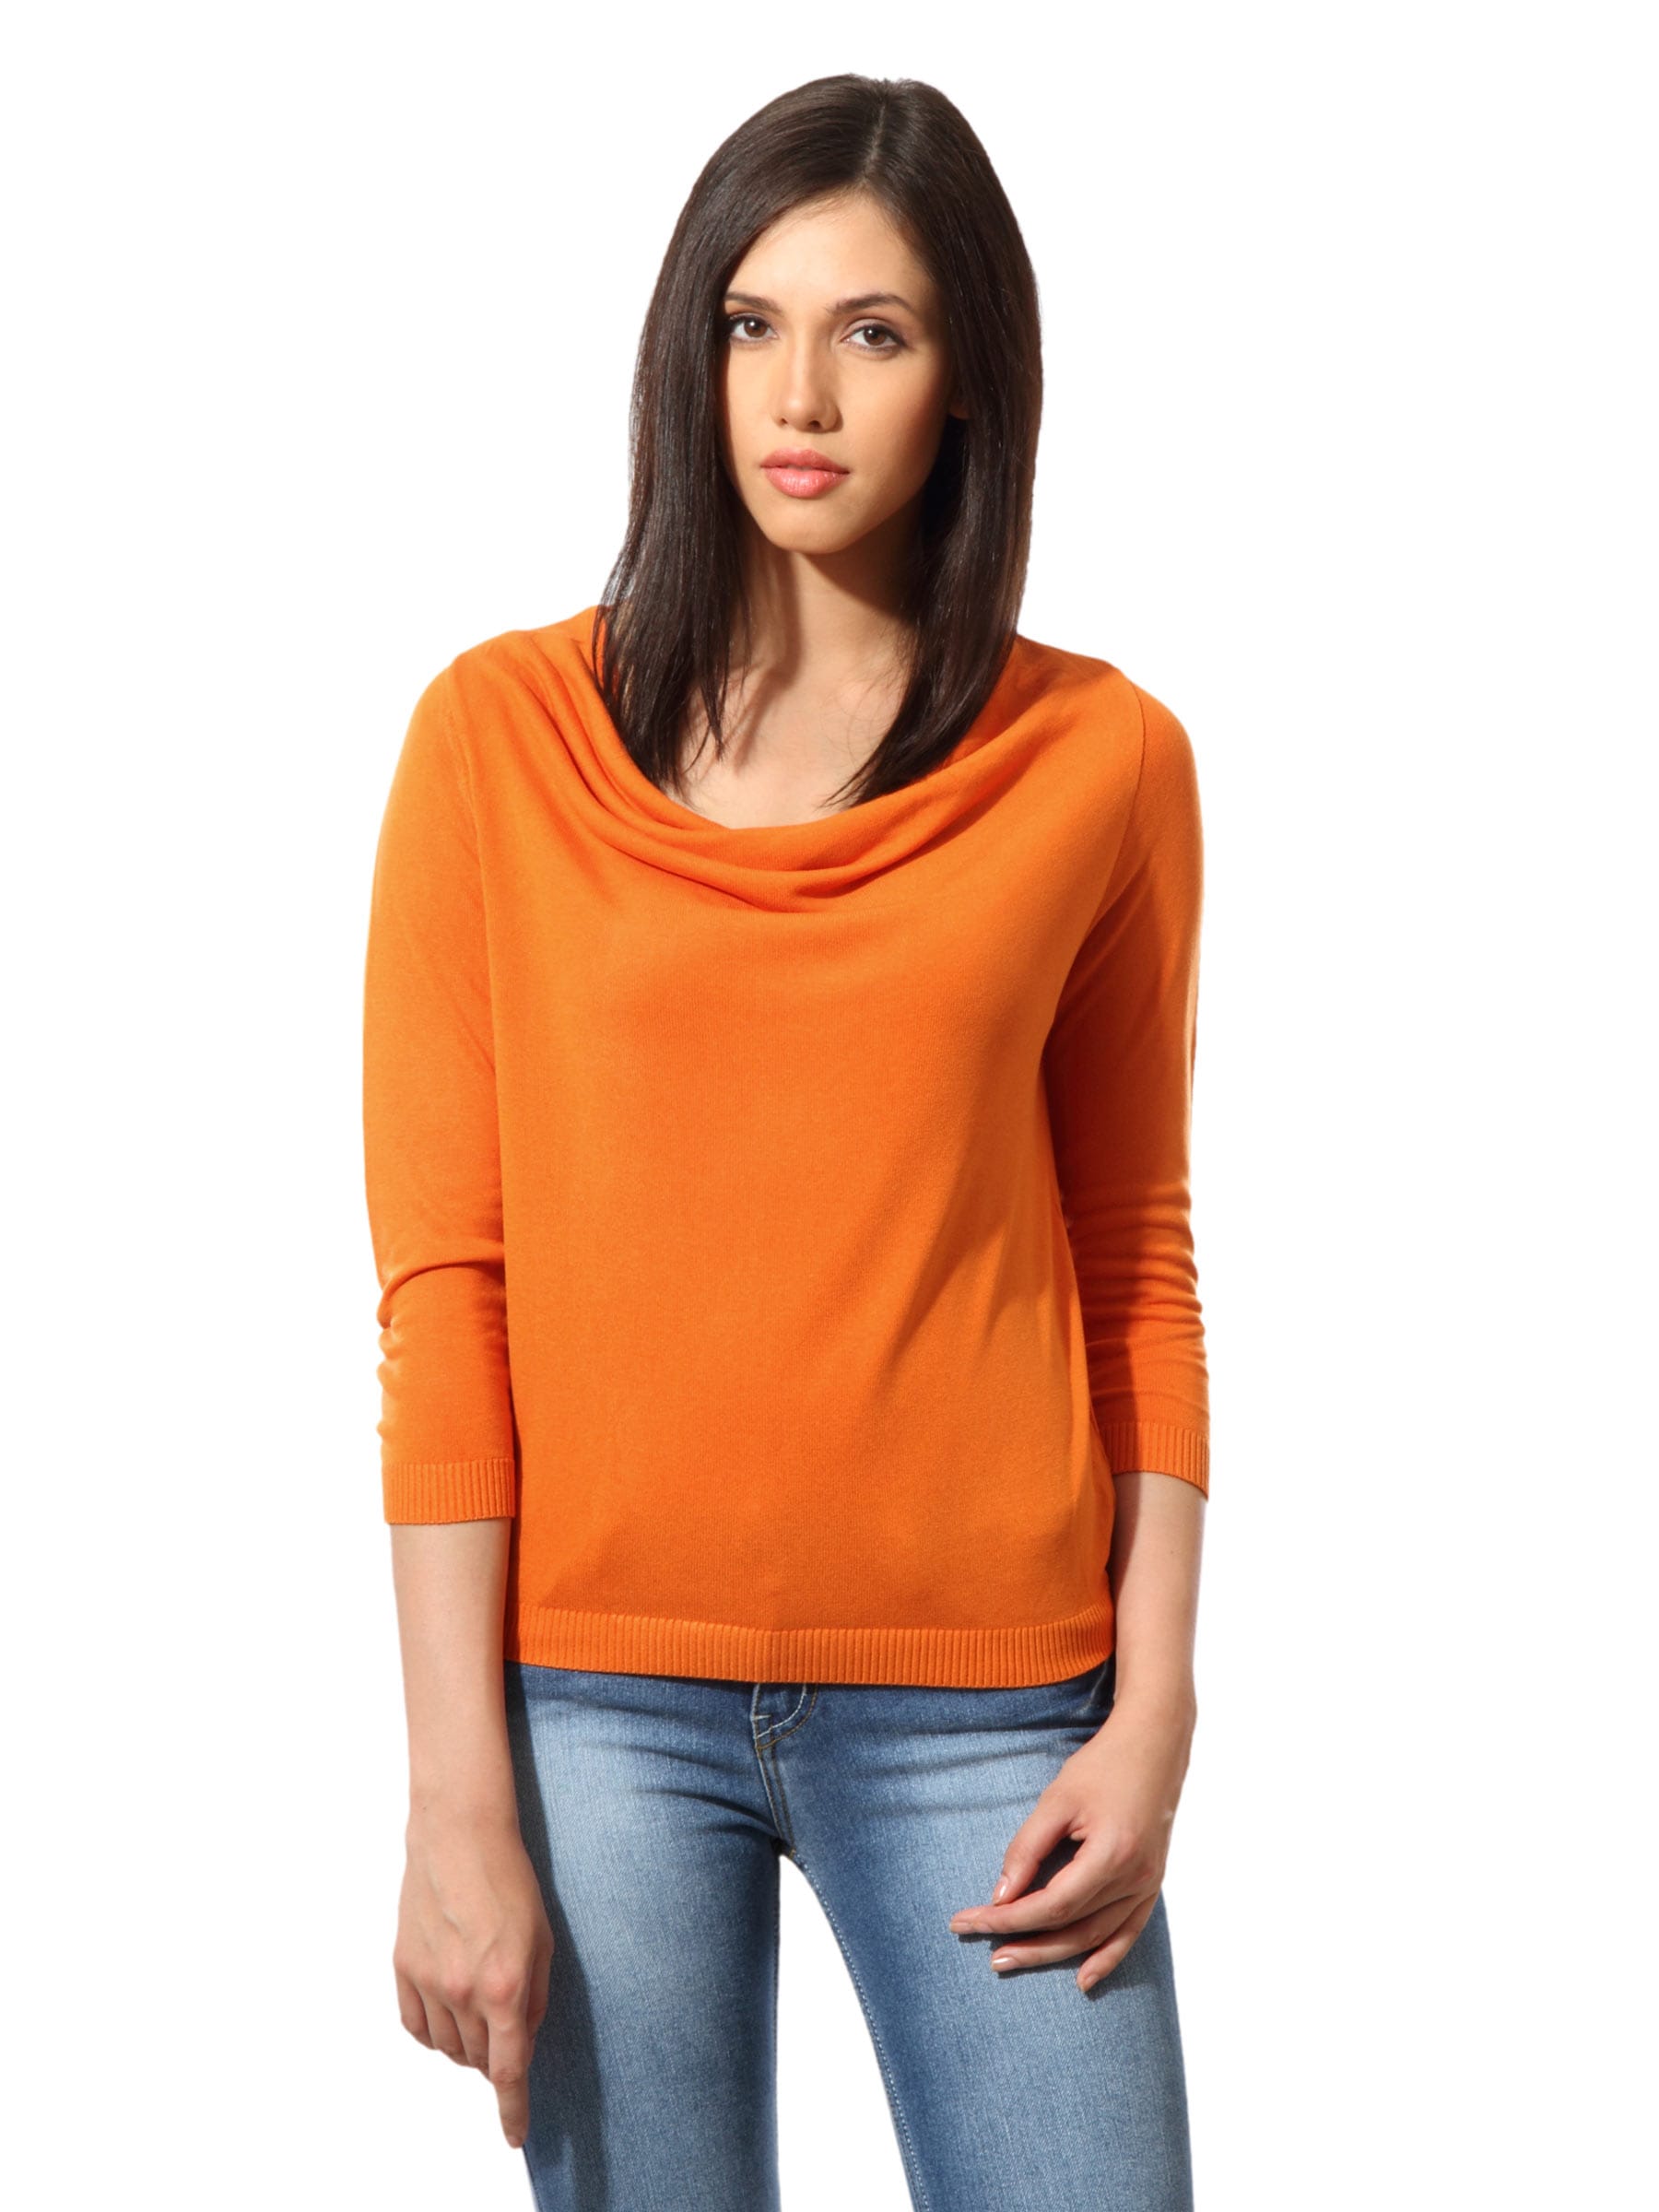 United Colors of Benetton Women Orange Top